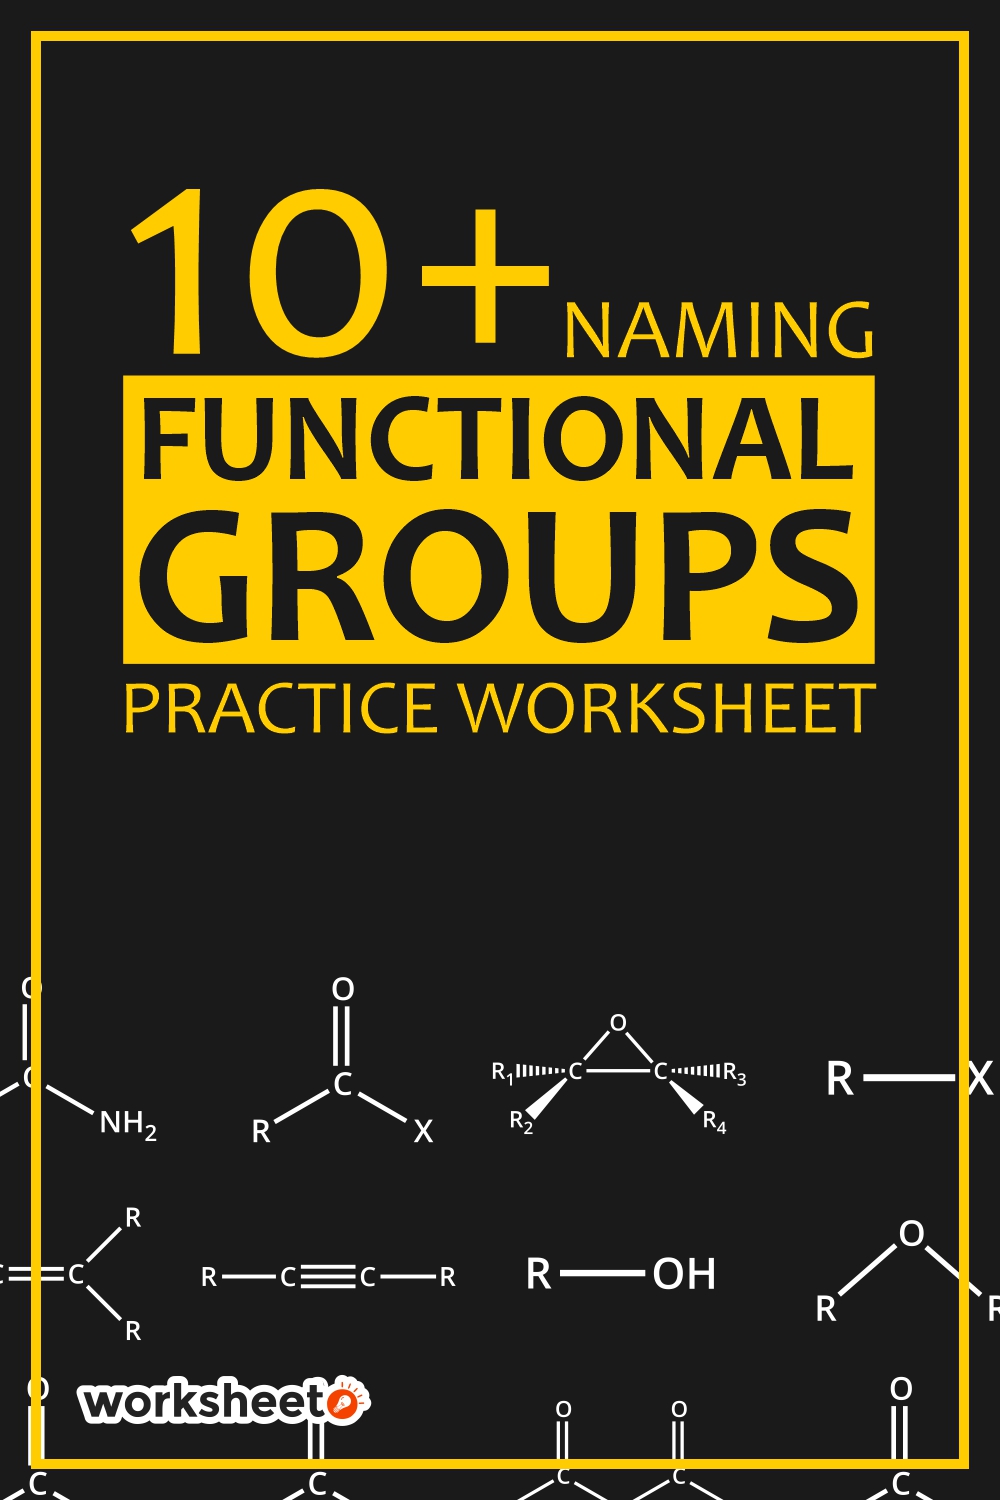 15 Images of Naming Functional Groups Practice Worksheet